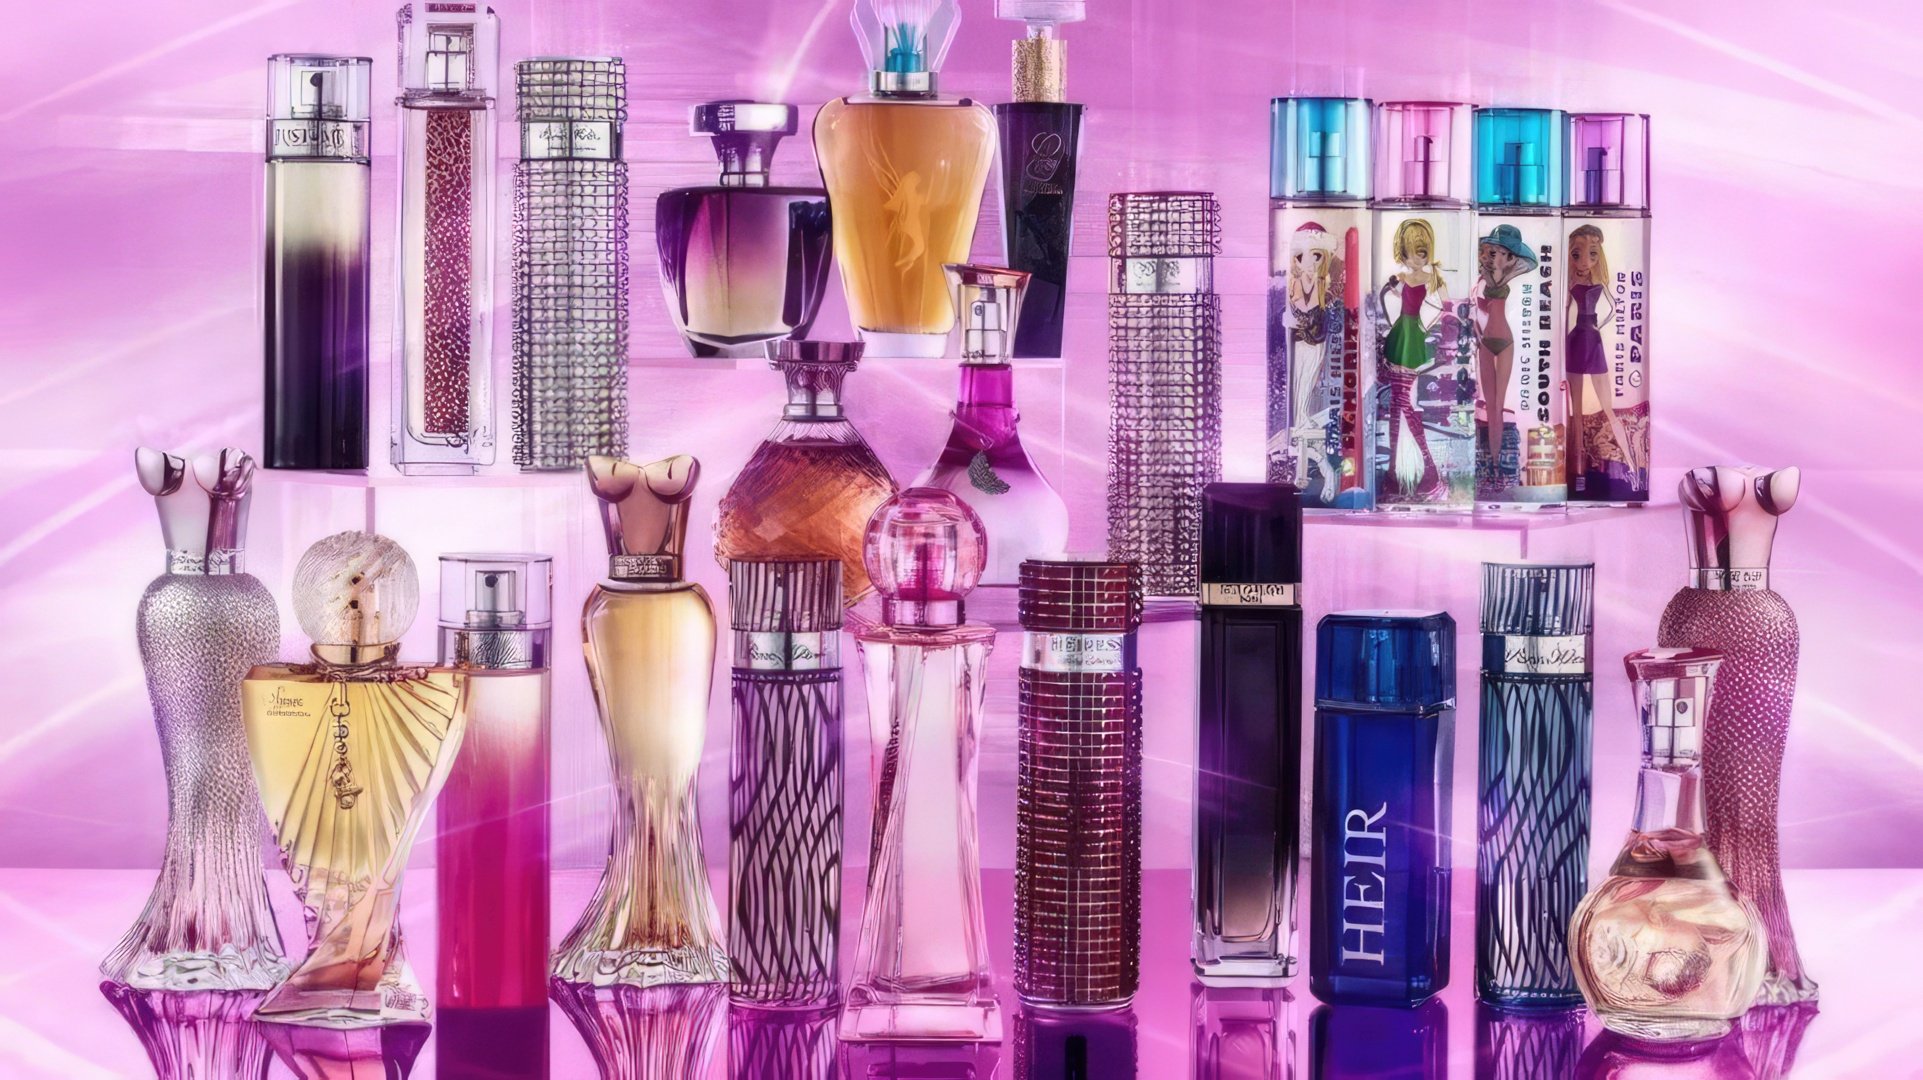 Perfume from Paris Hilton